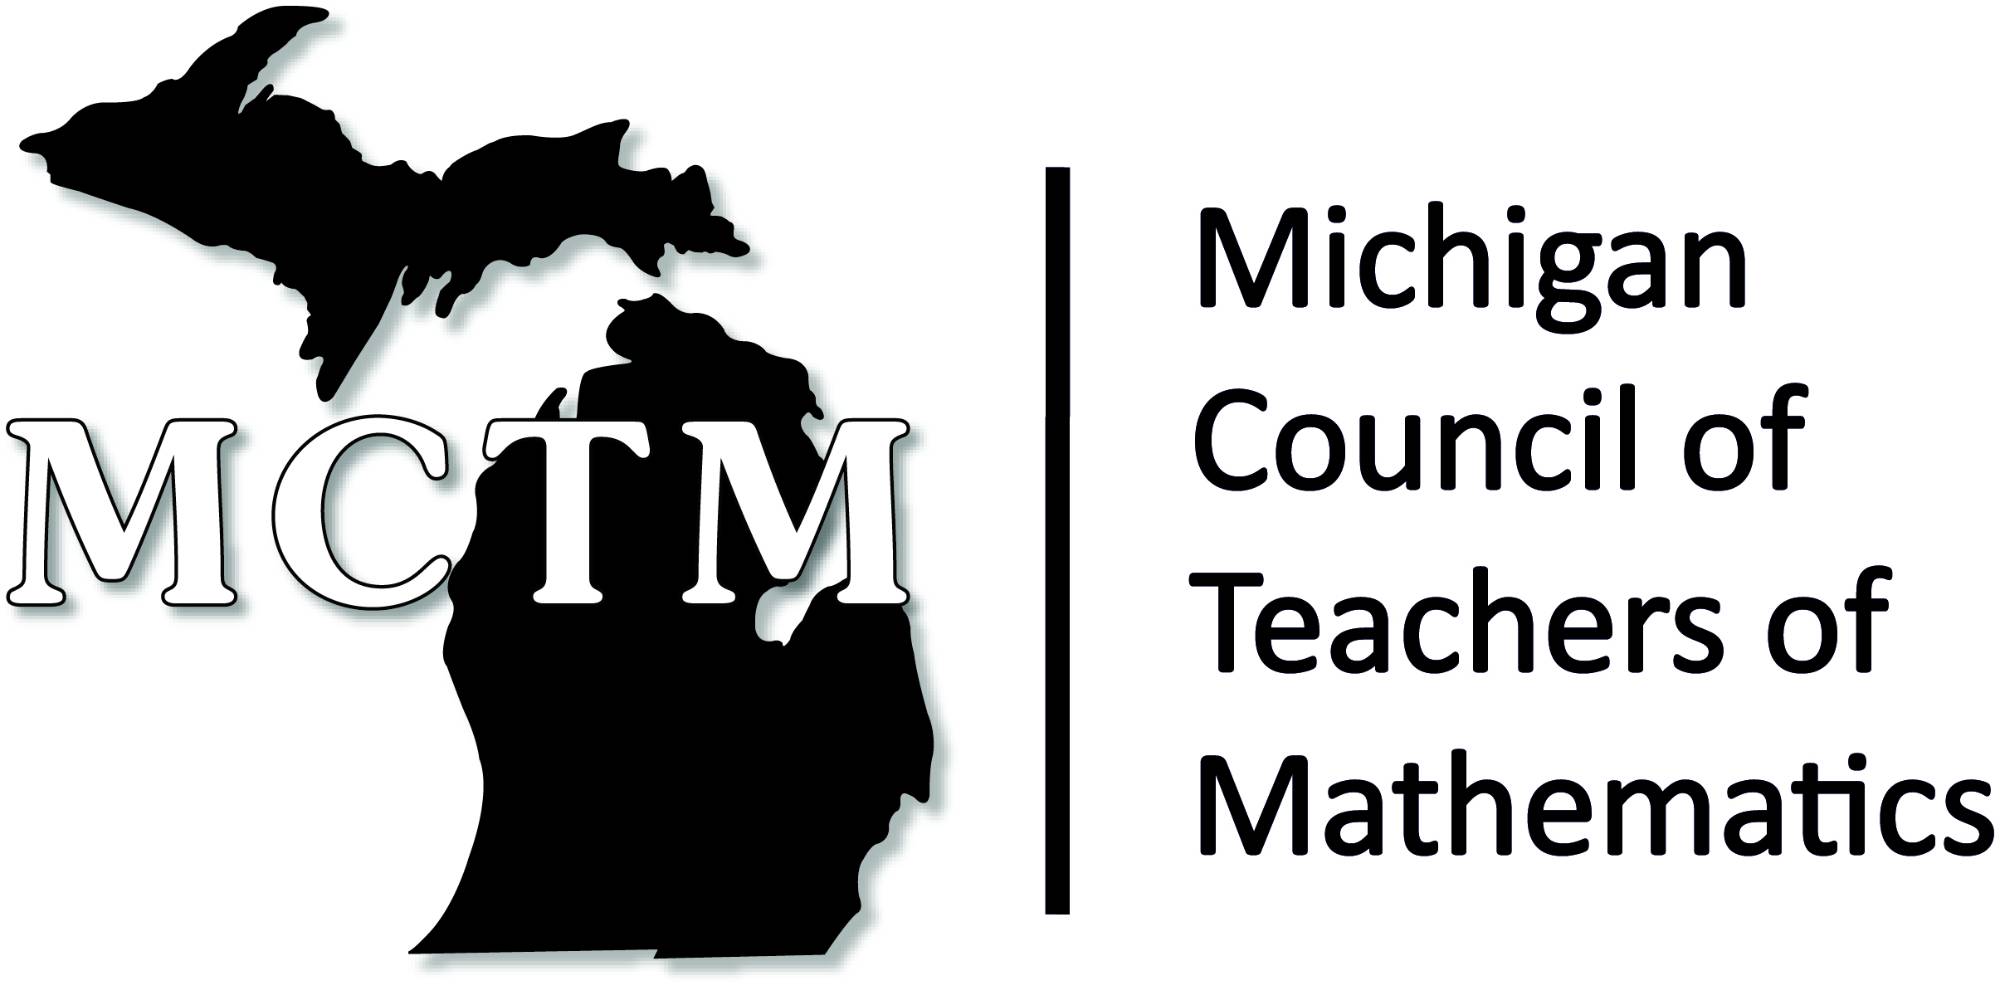 Michigan Council of Teachers of Mathematics